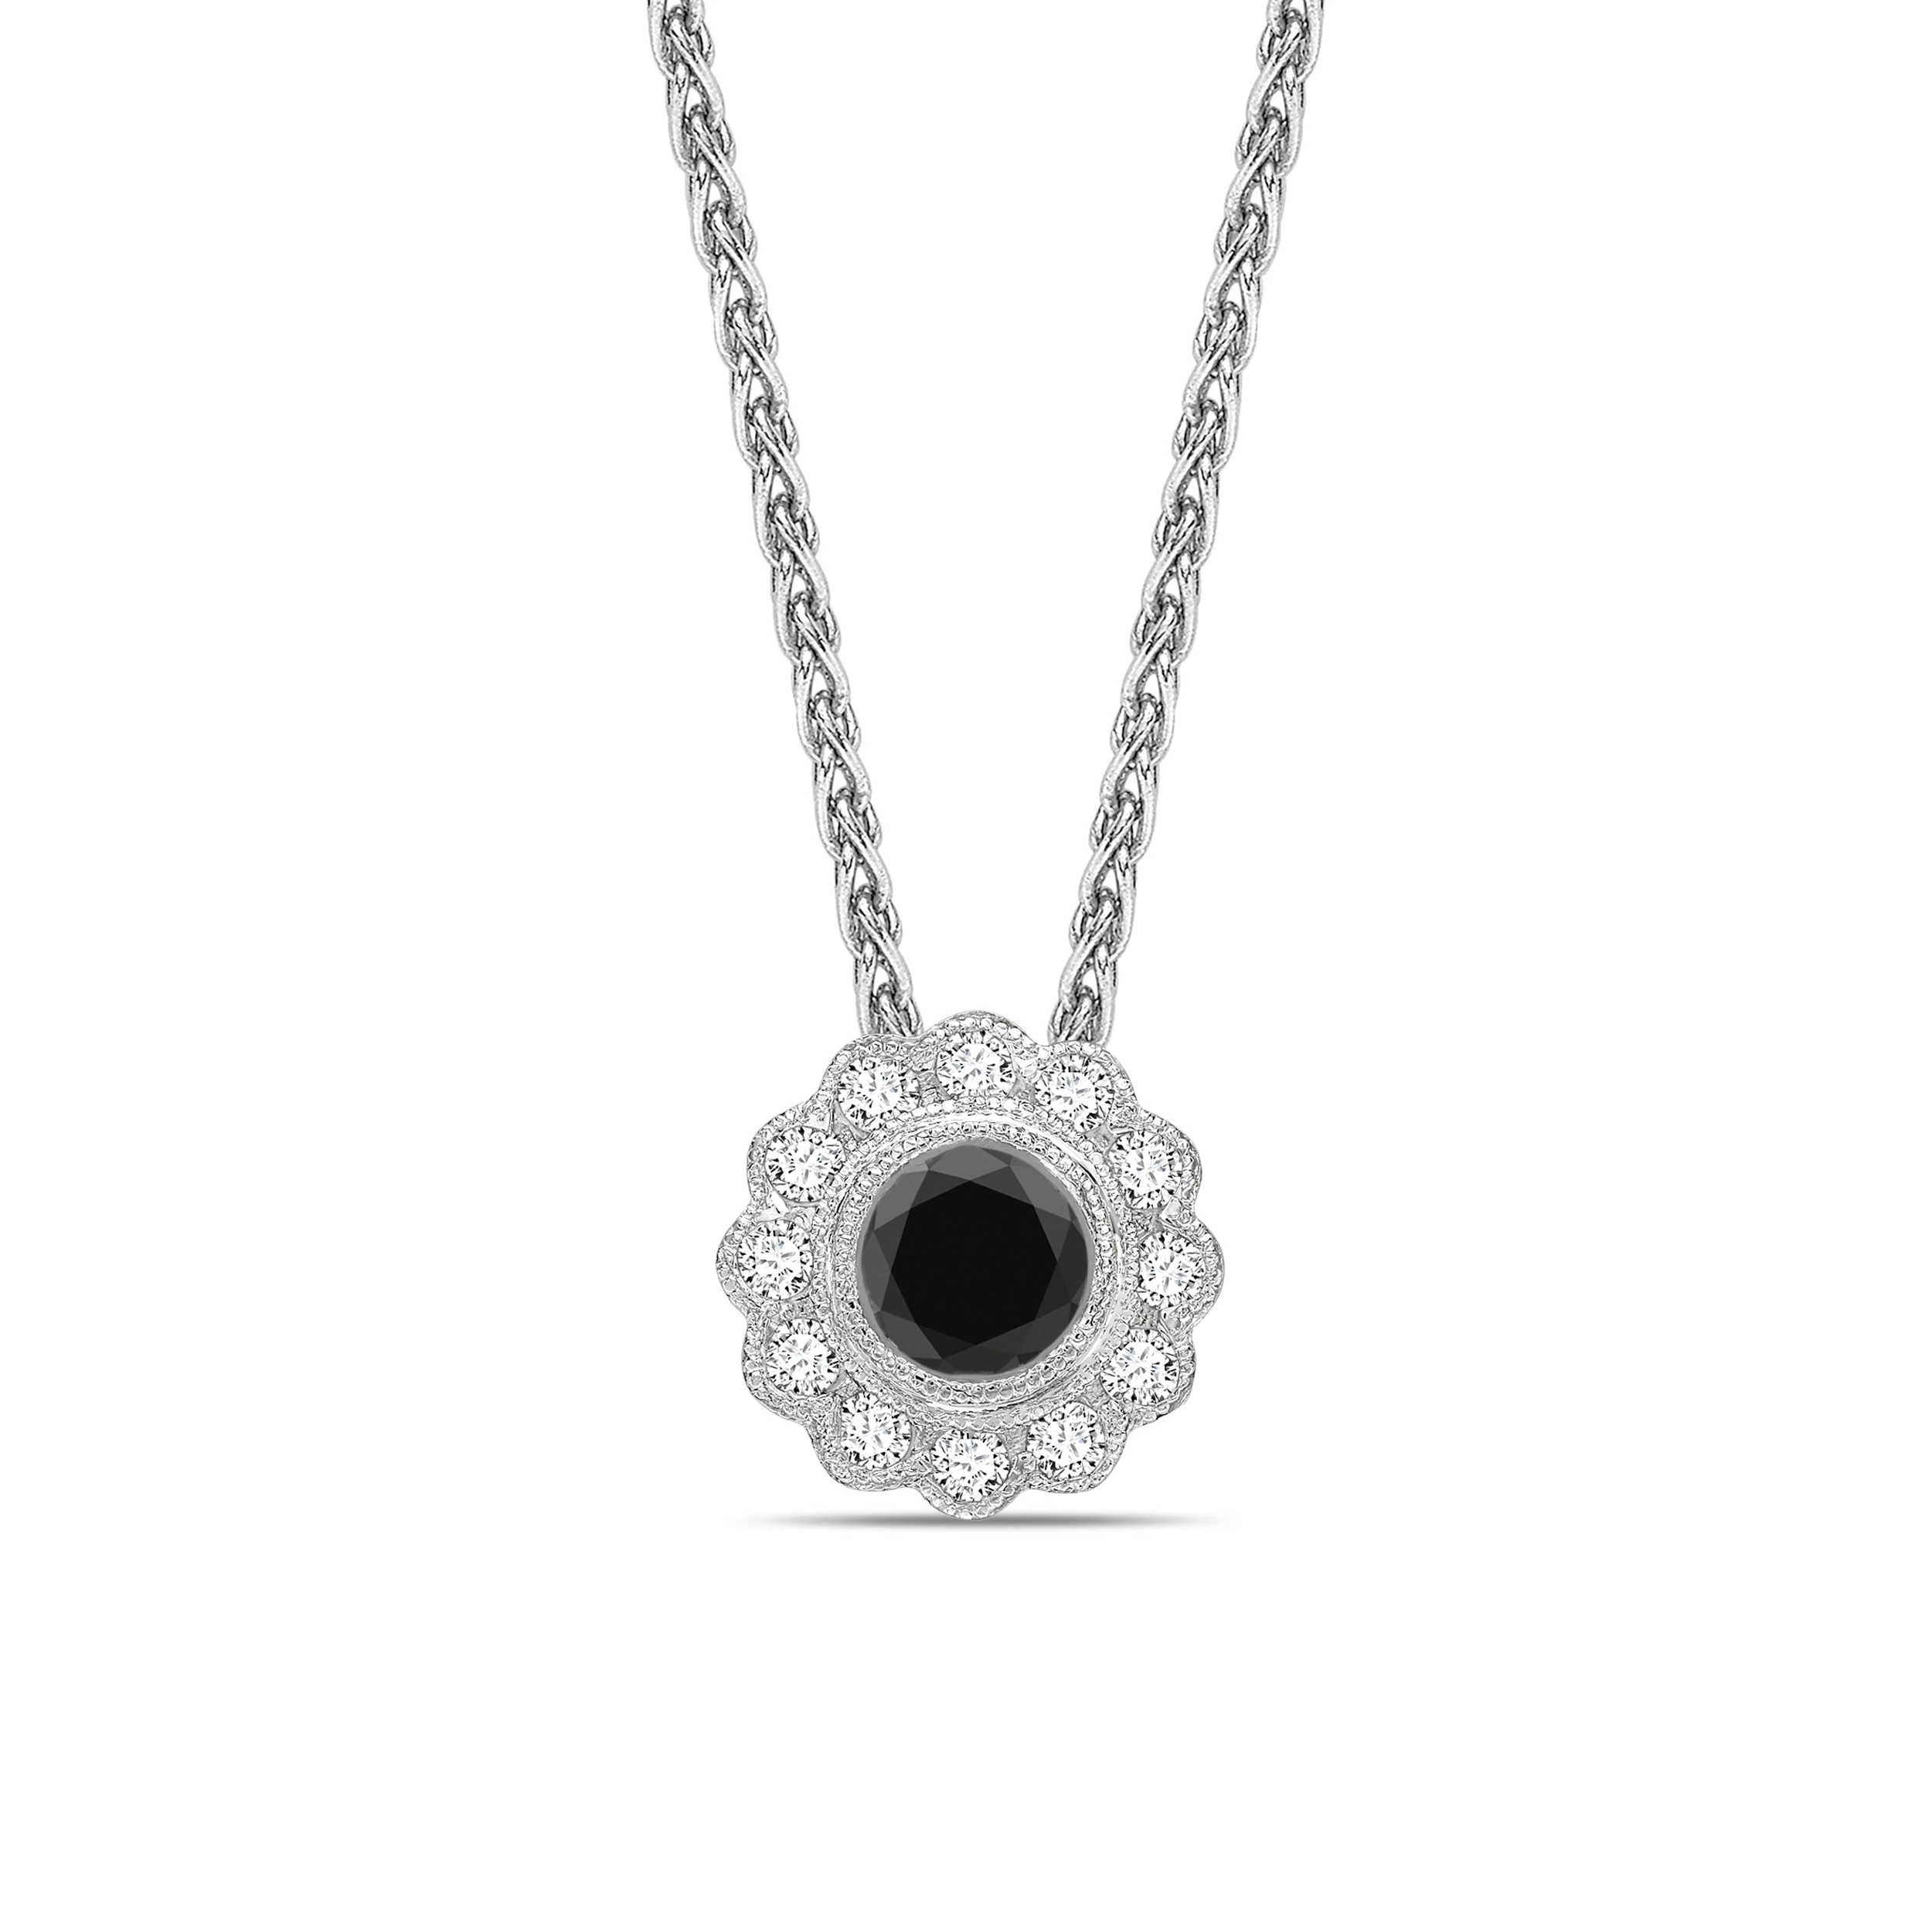 Halo Style Black Diamond Solitaire Pendants Necklace in Miligrain Round Cut